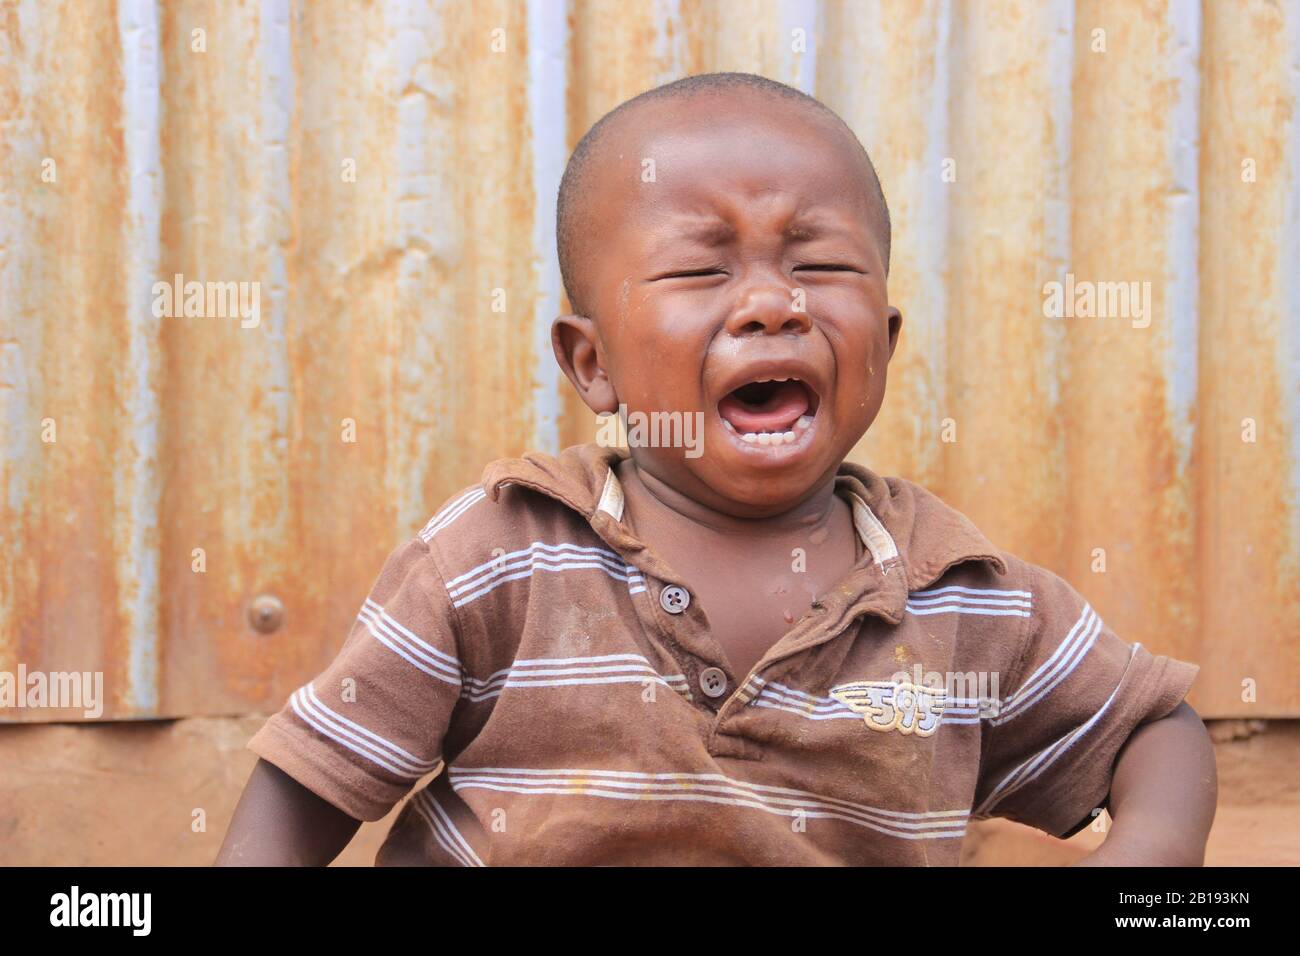 Kibera, Nairobi, Kenya - 13 febbraio 2015: Un bambino africano povero e sporco che grida forte Foto Stock